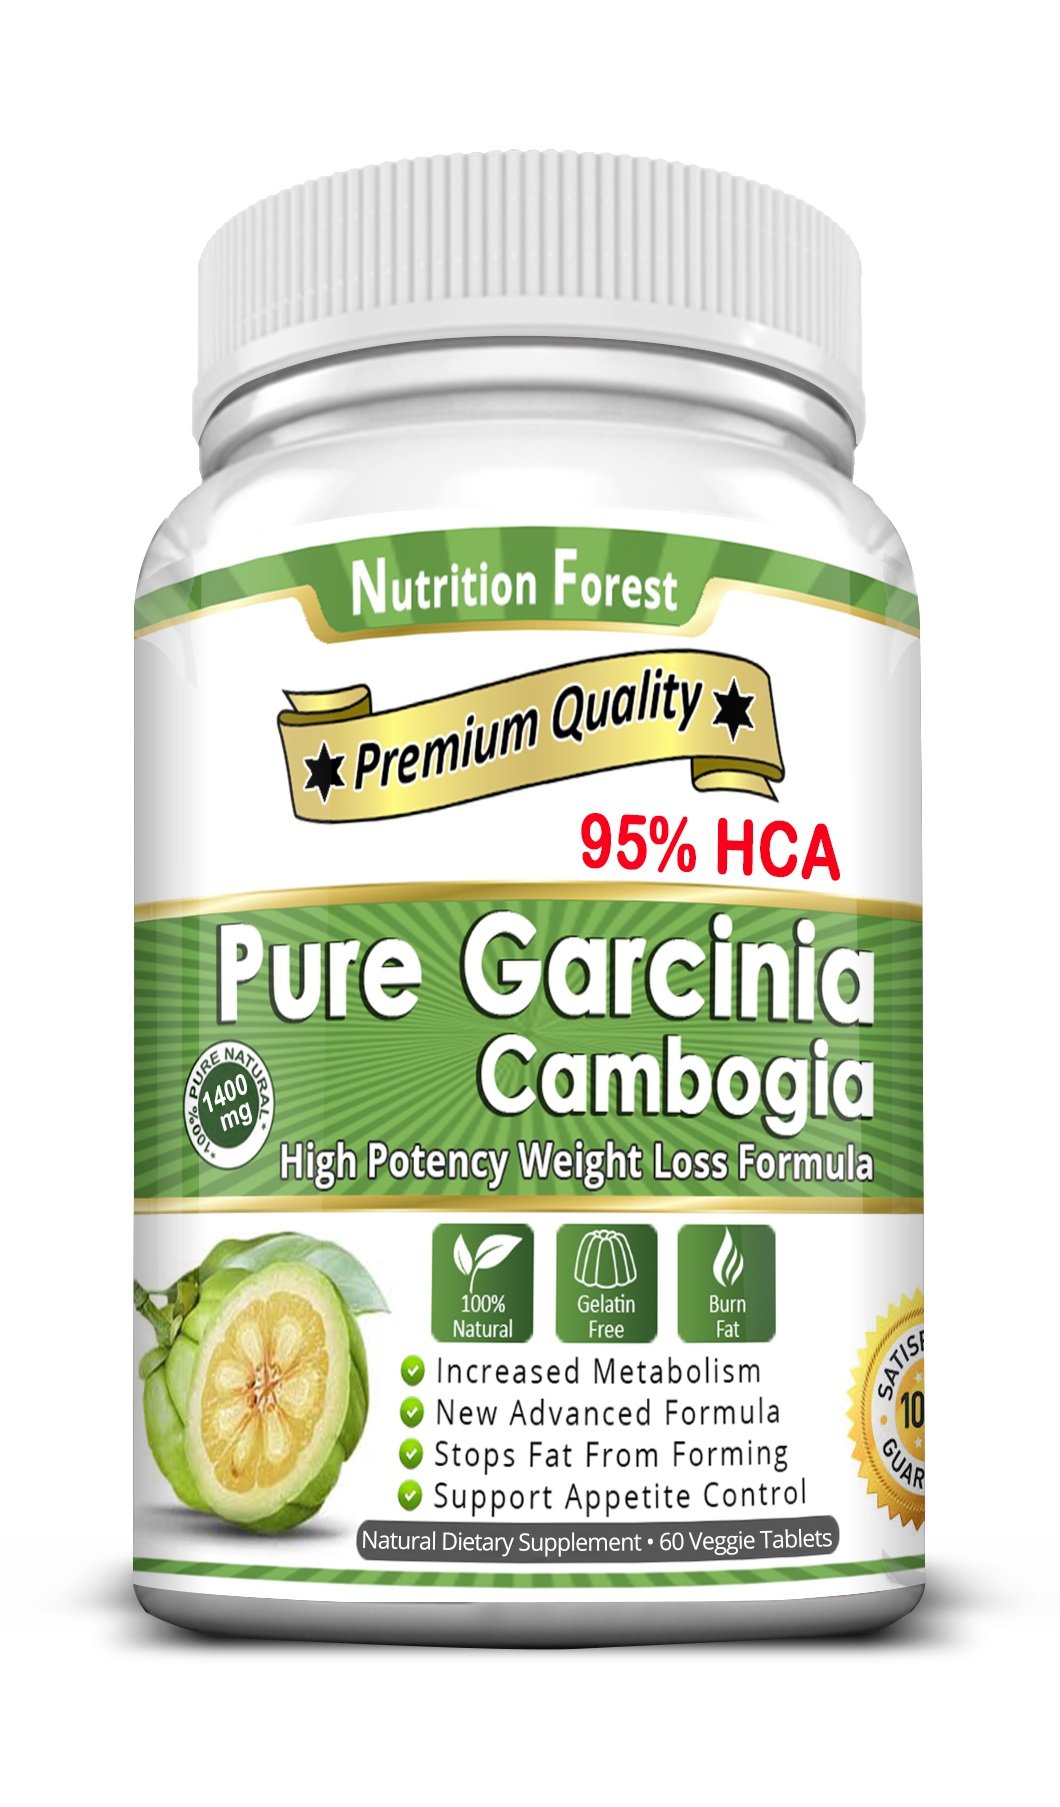 Garcinia Cambogia Weight Loss